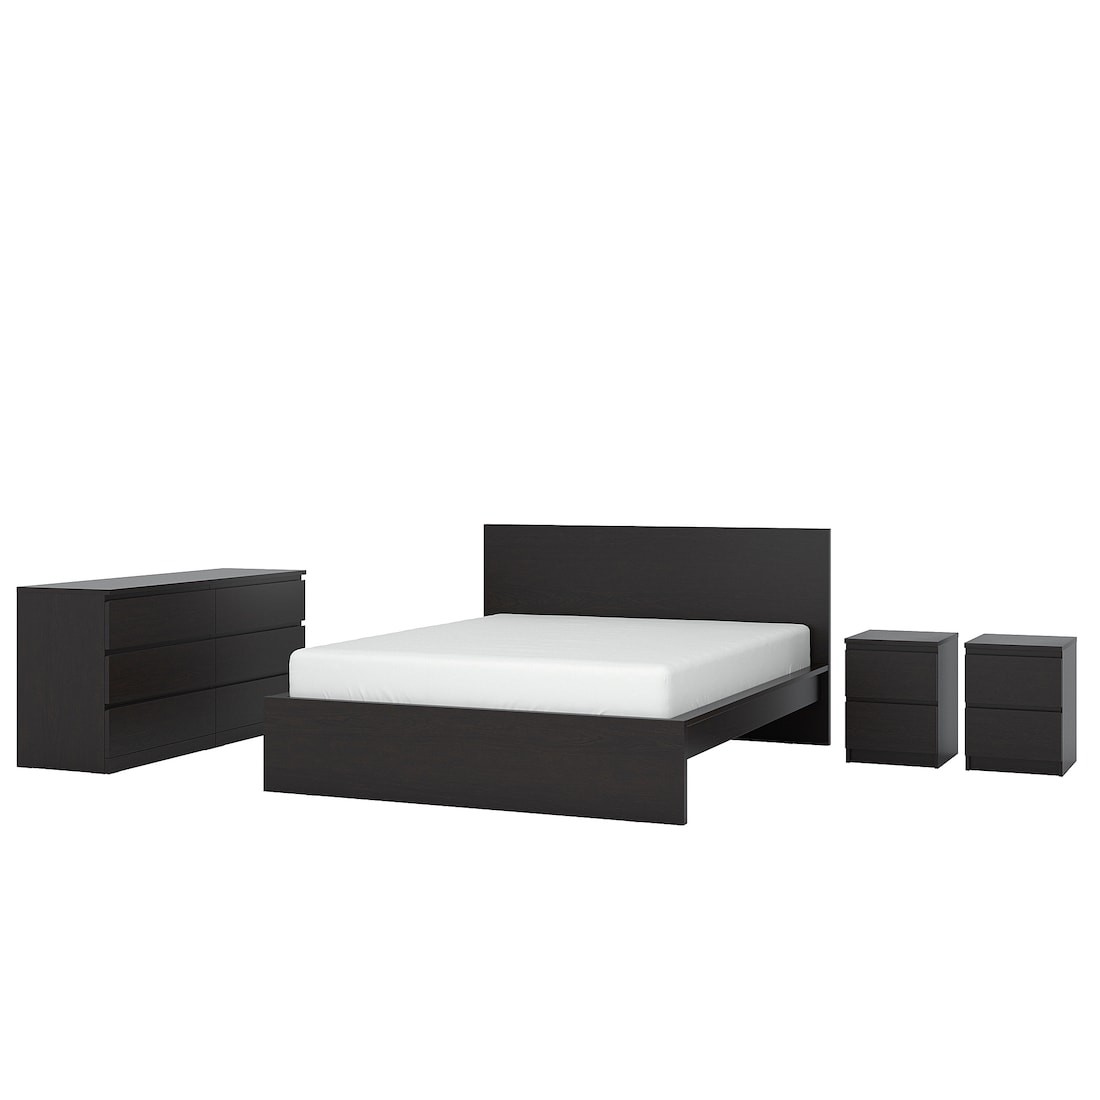 MALM МАЛЬМ Набор мебели для спальни 4 шт, черно-коричневый, 140x200 см